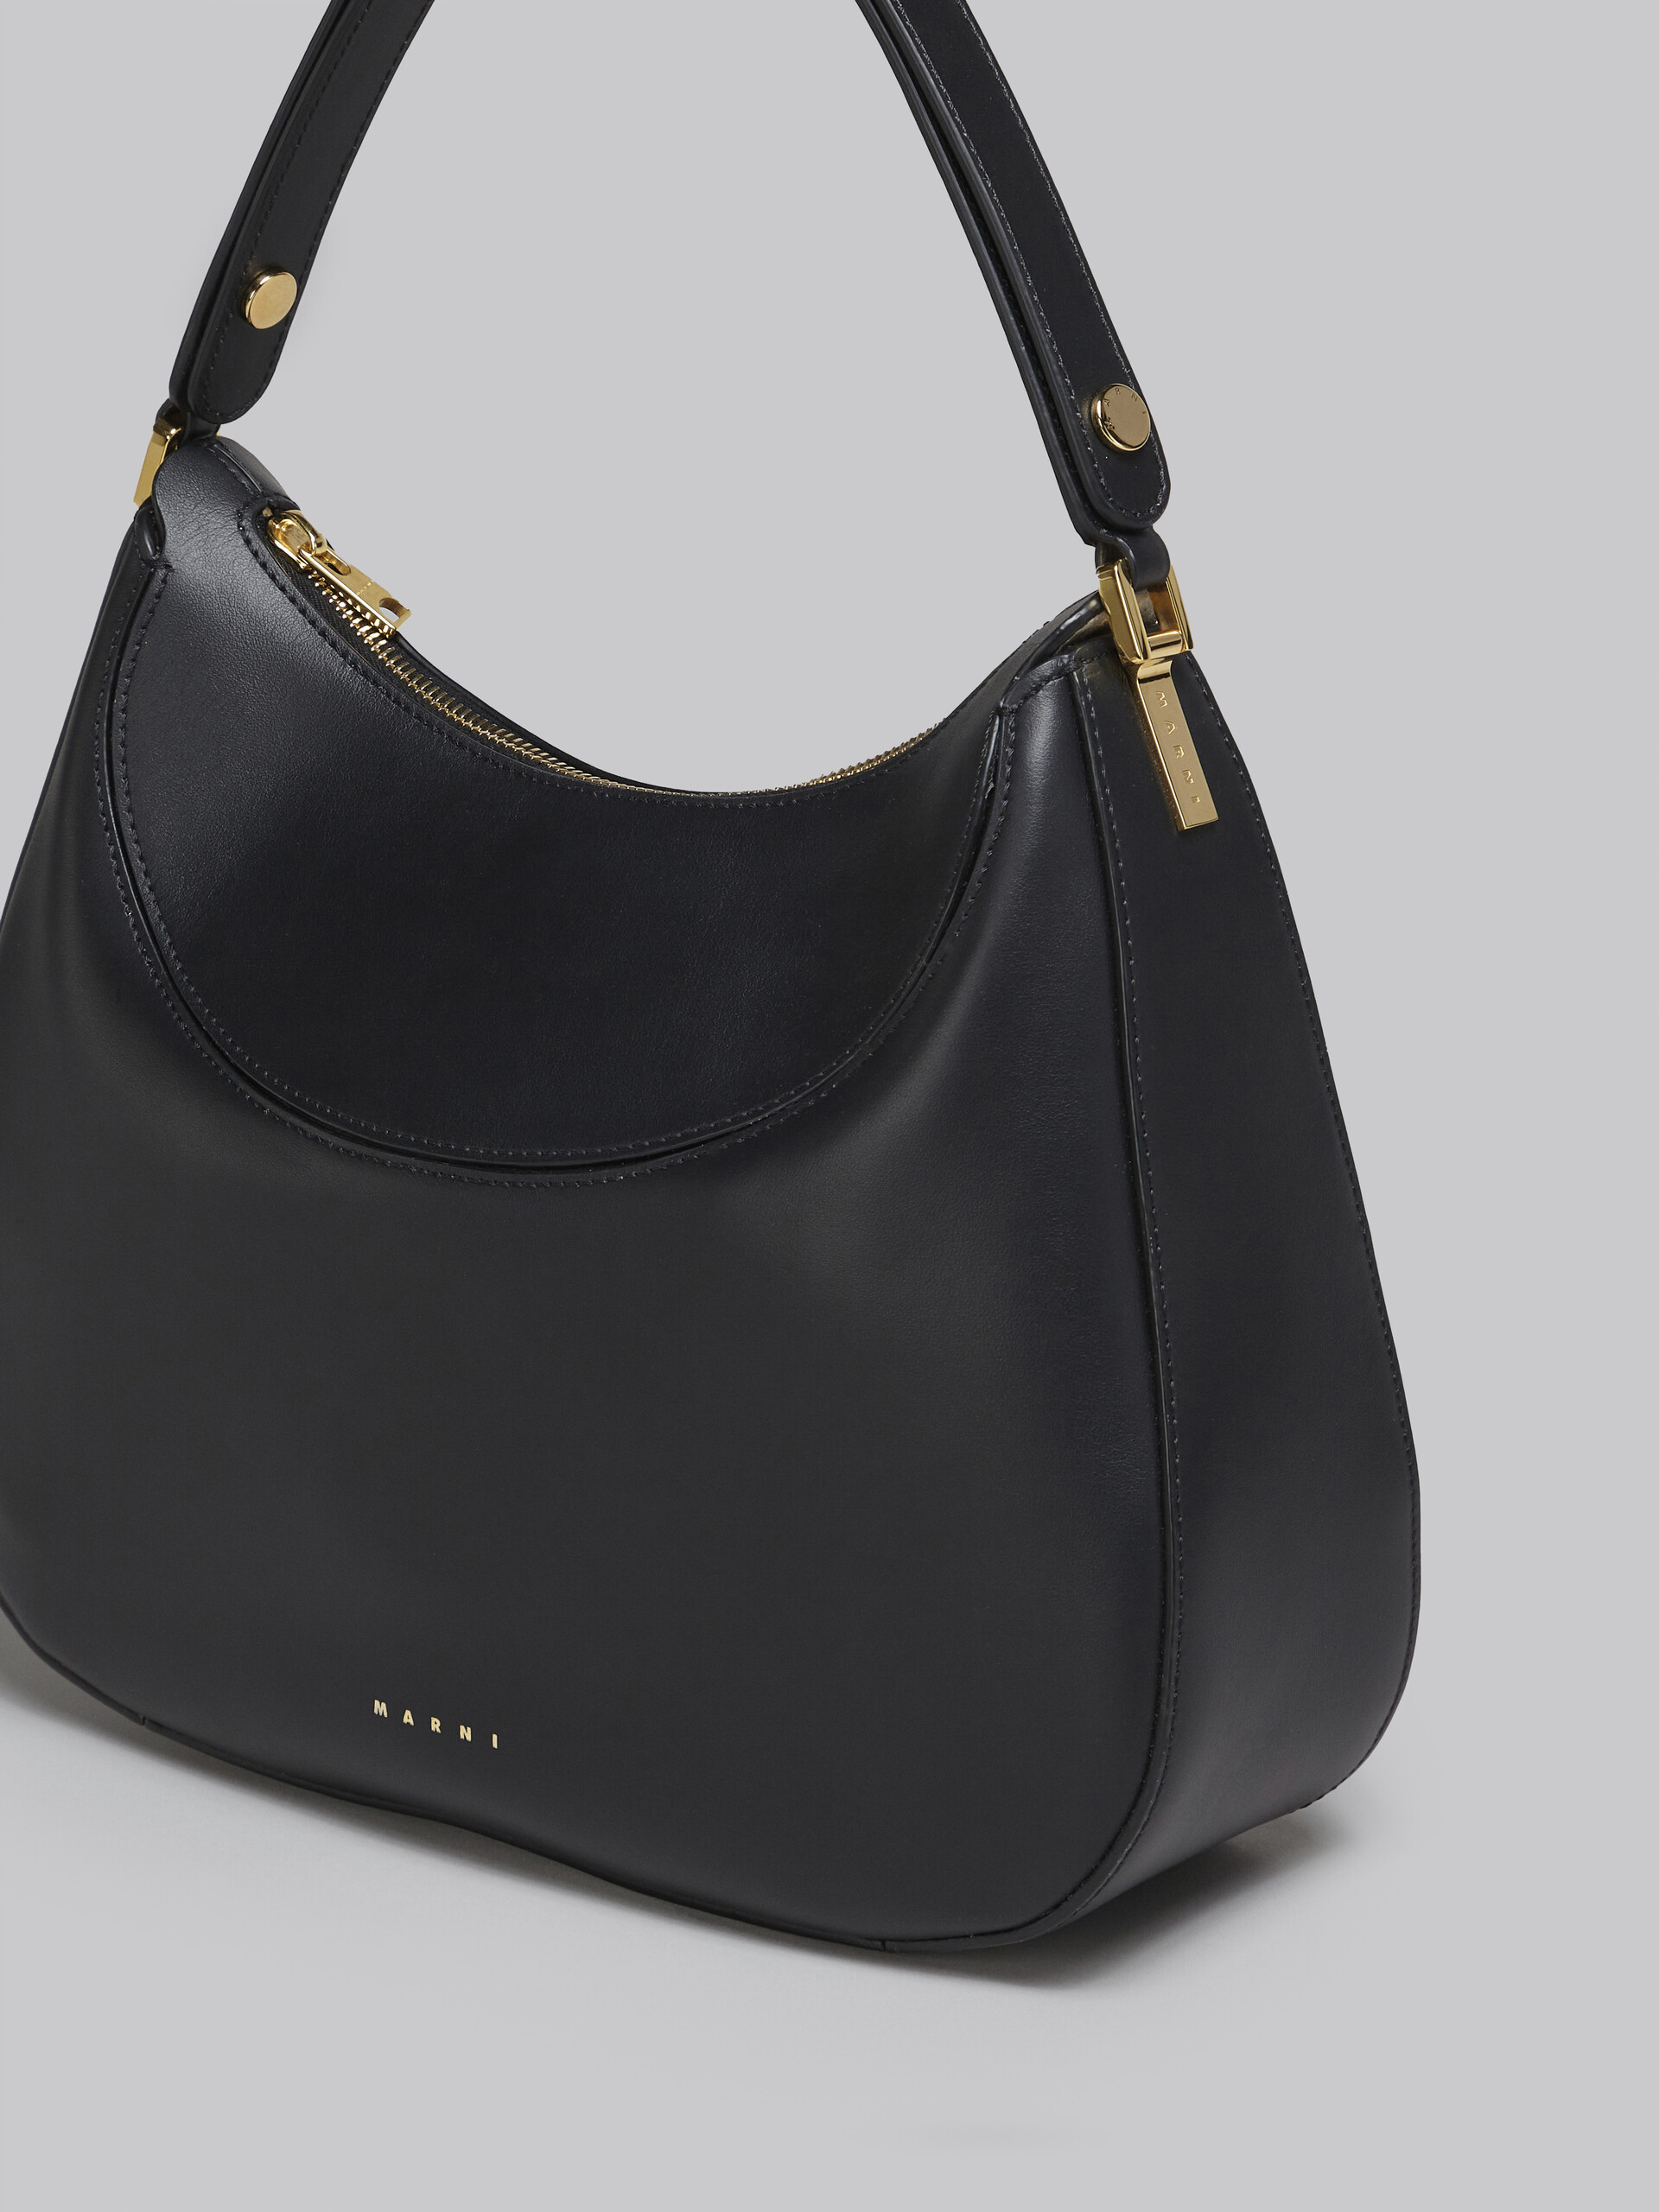 Milano large bag in black leather - Handbags - Image 5